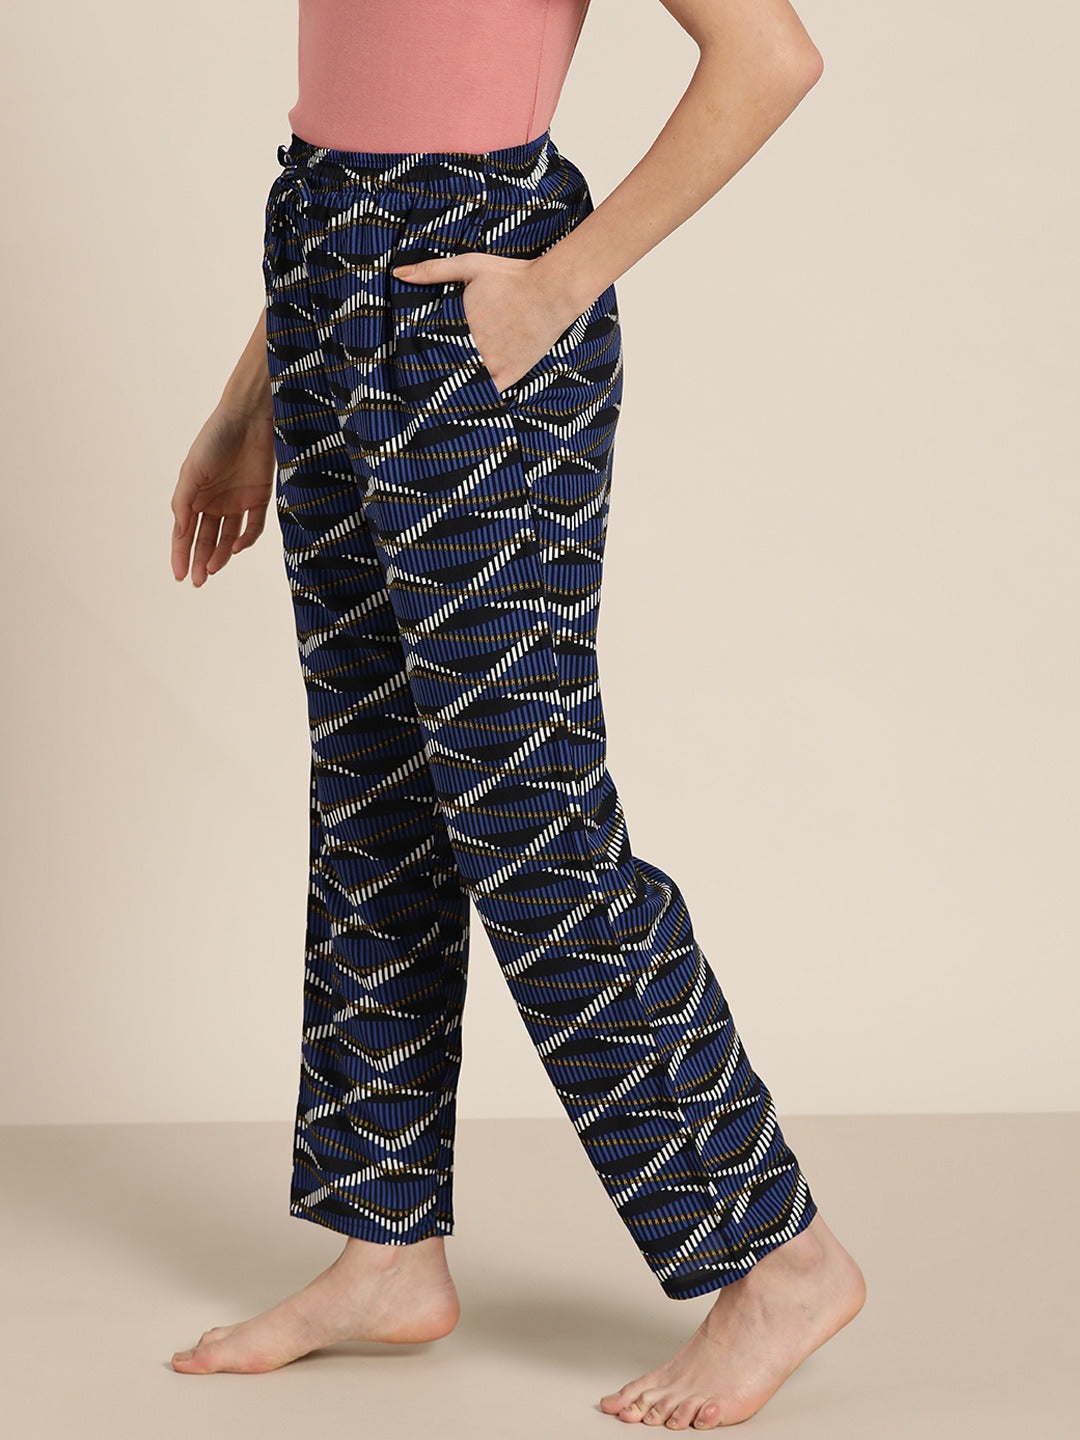 Joyspun Women's Flannel Lounge Pants, 2-Pack, Sizes S to 3X - Walmart.com